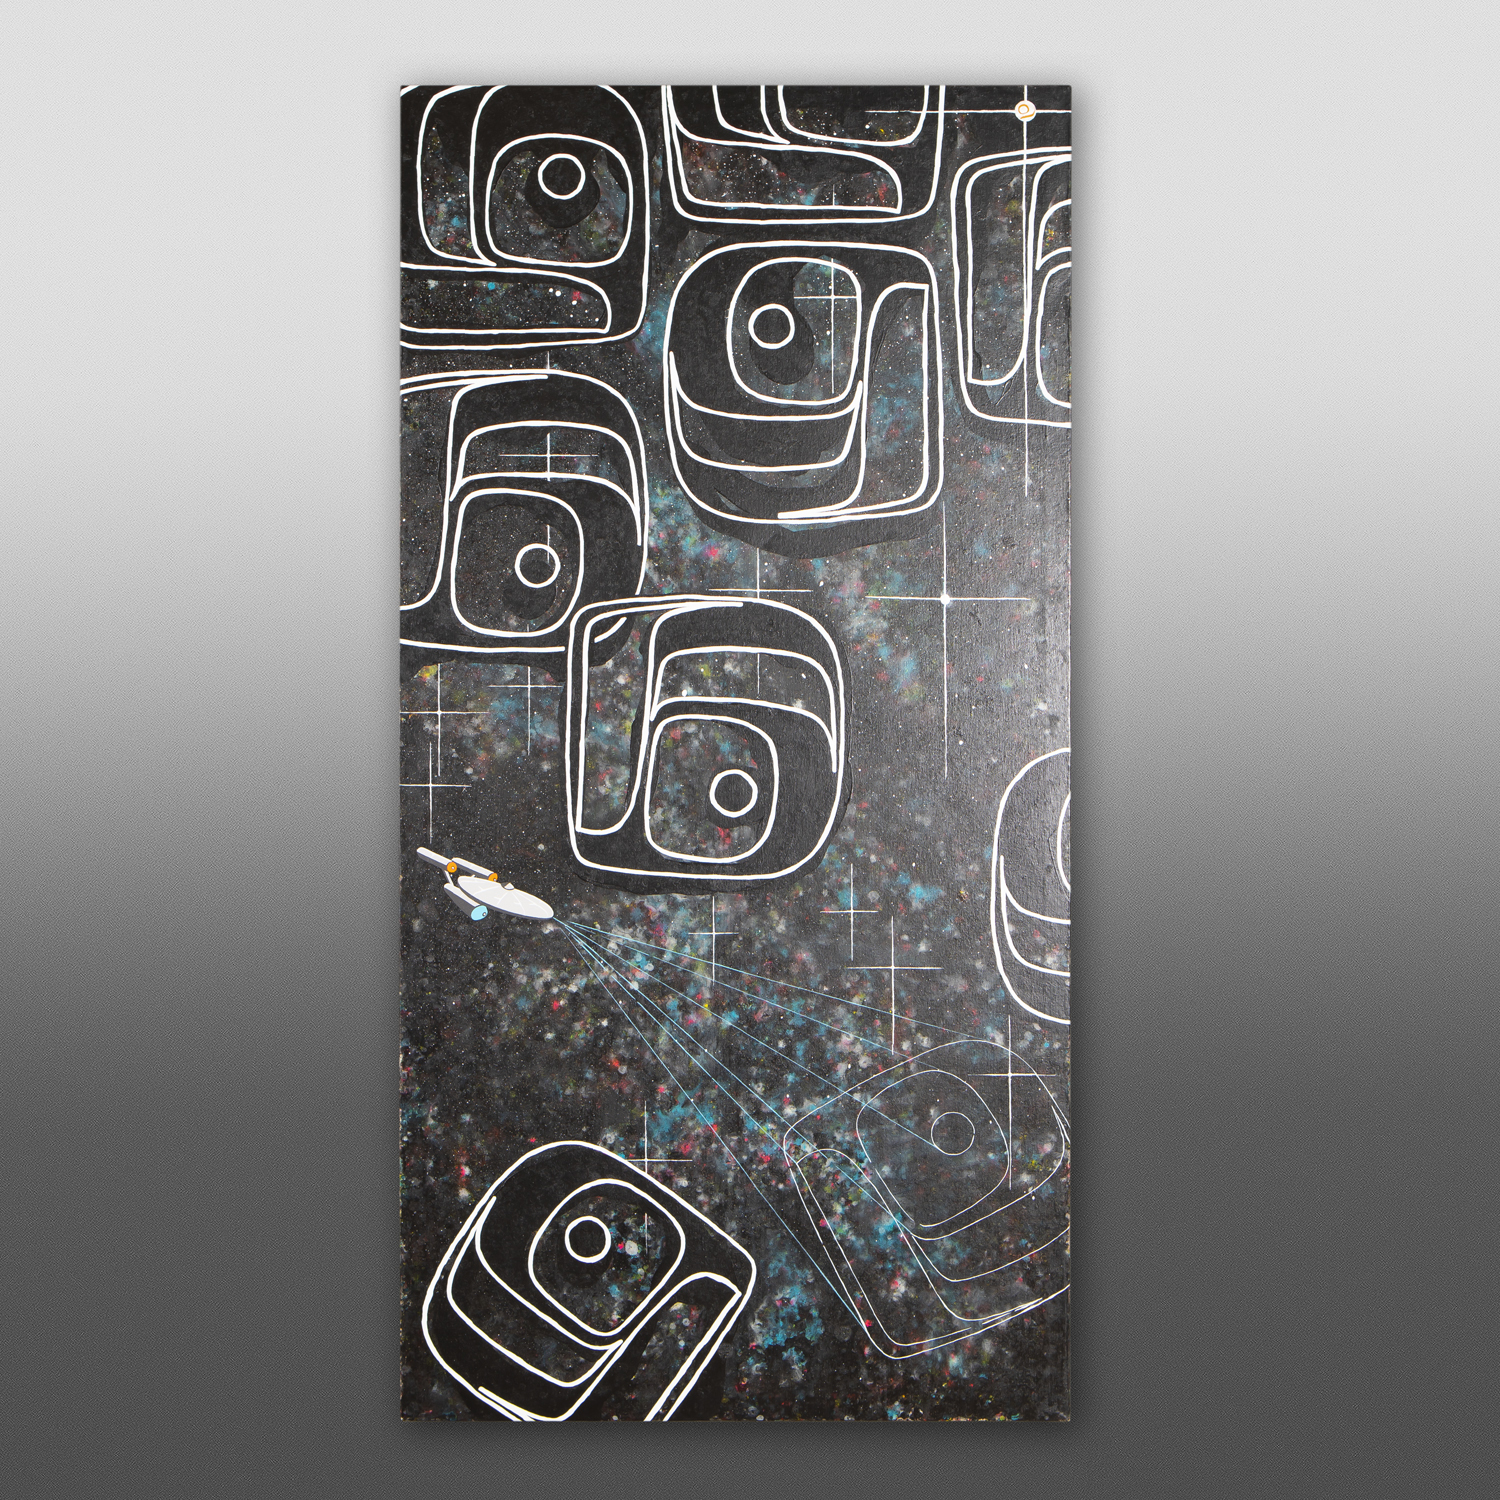 Aquarius RisingClinton Work
Kwakwaka'wakwAcrylic on canvas
22” x 48” x 1½”
$3600